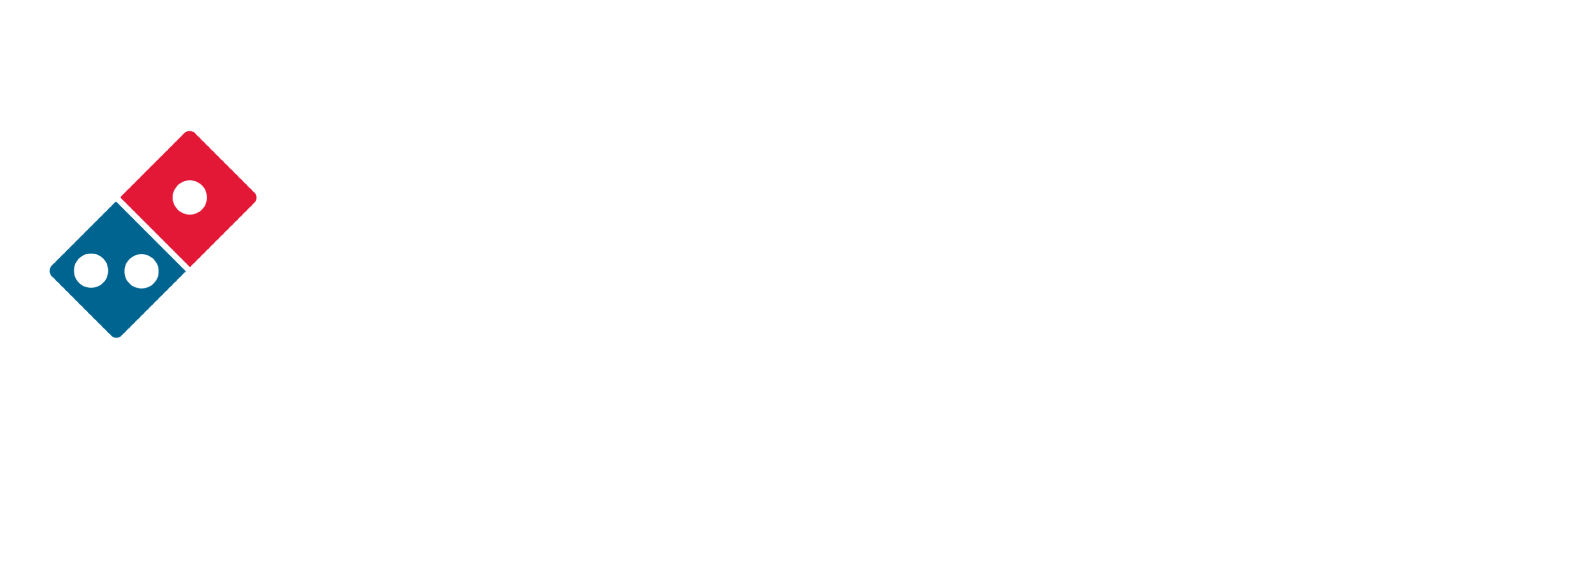 Sector-Page-Dominos Coop Logos